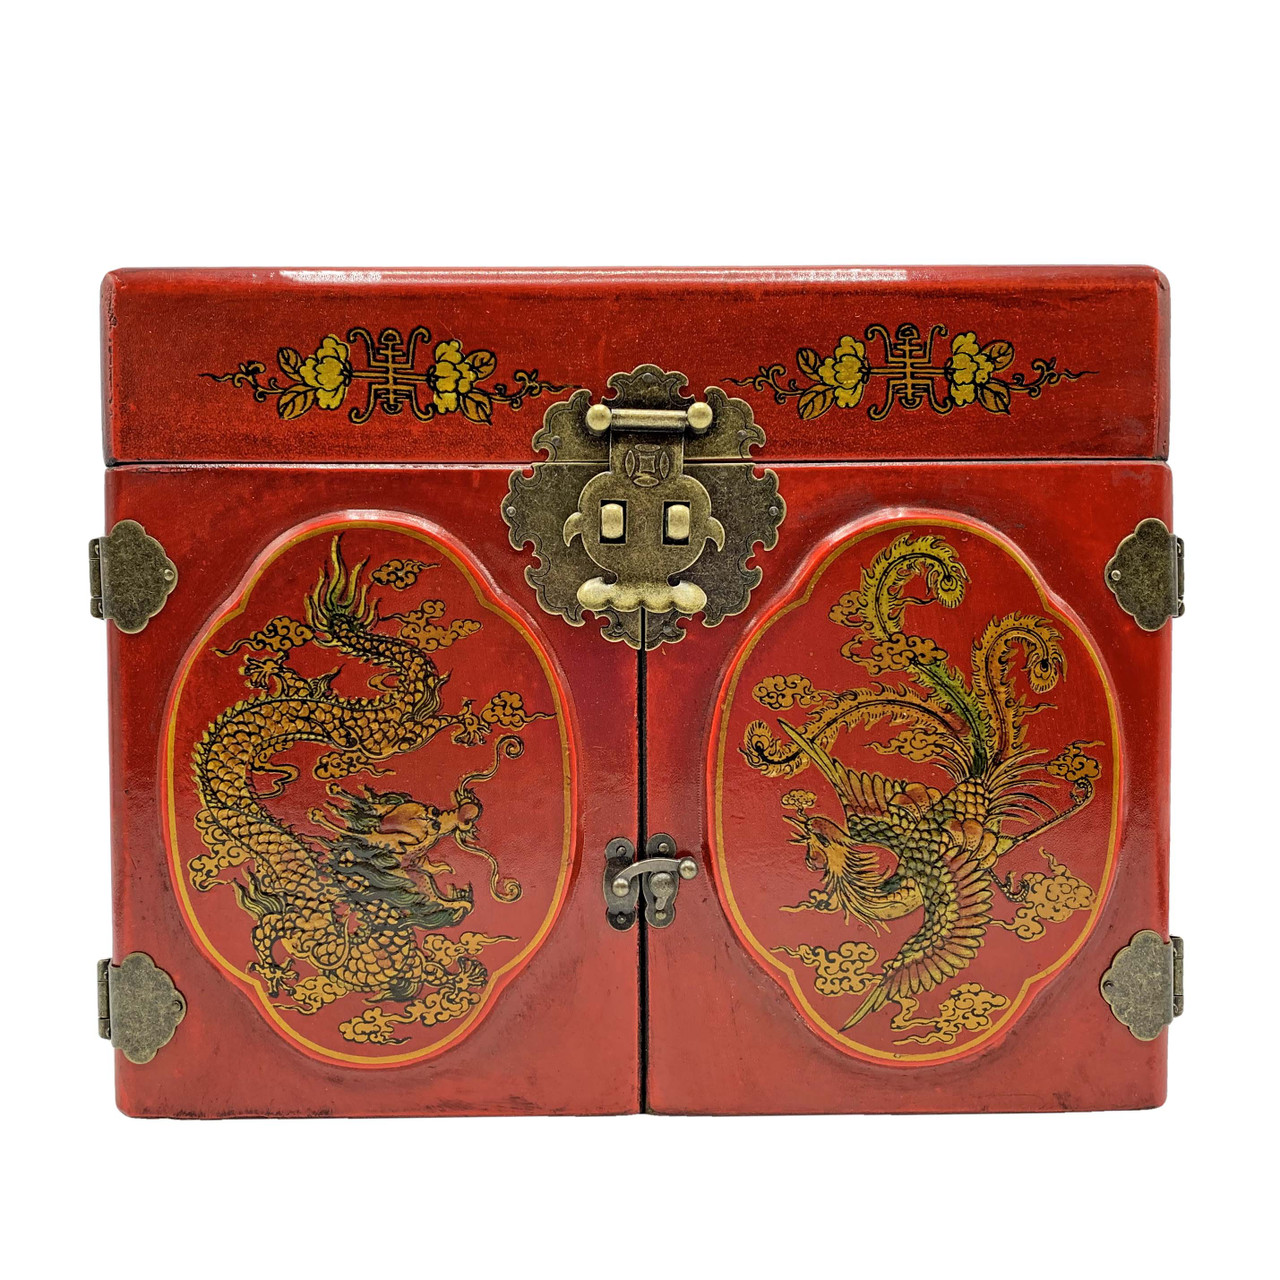 Gold Oriental Furniture Adorlee Jewelry Box